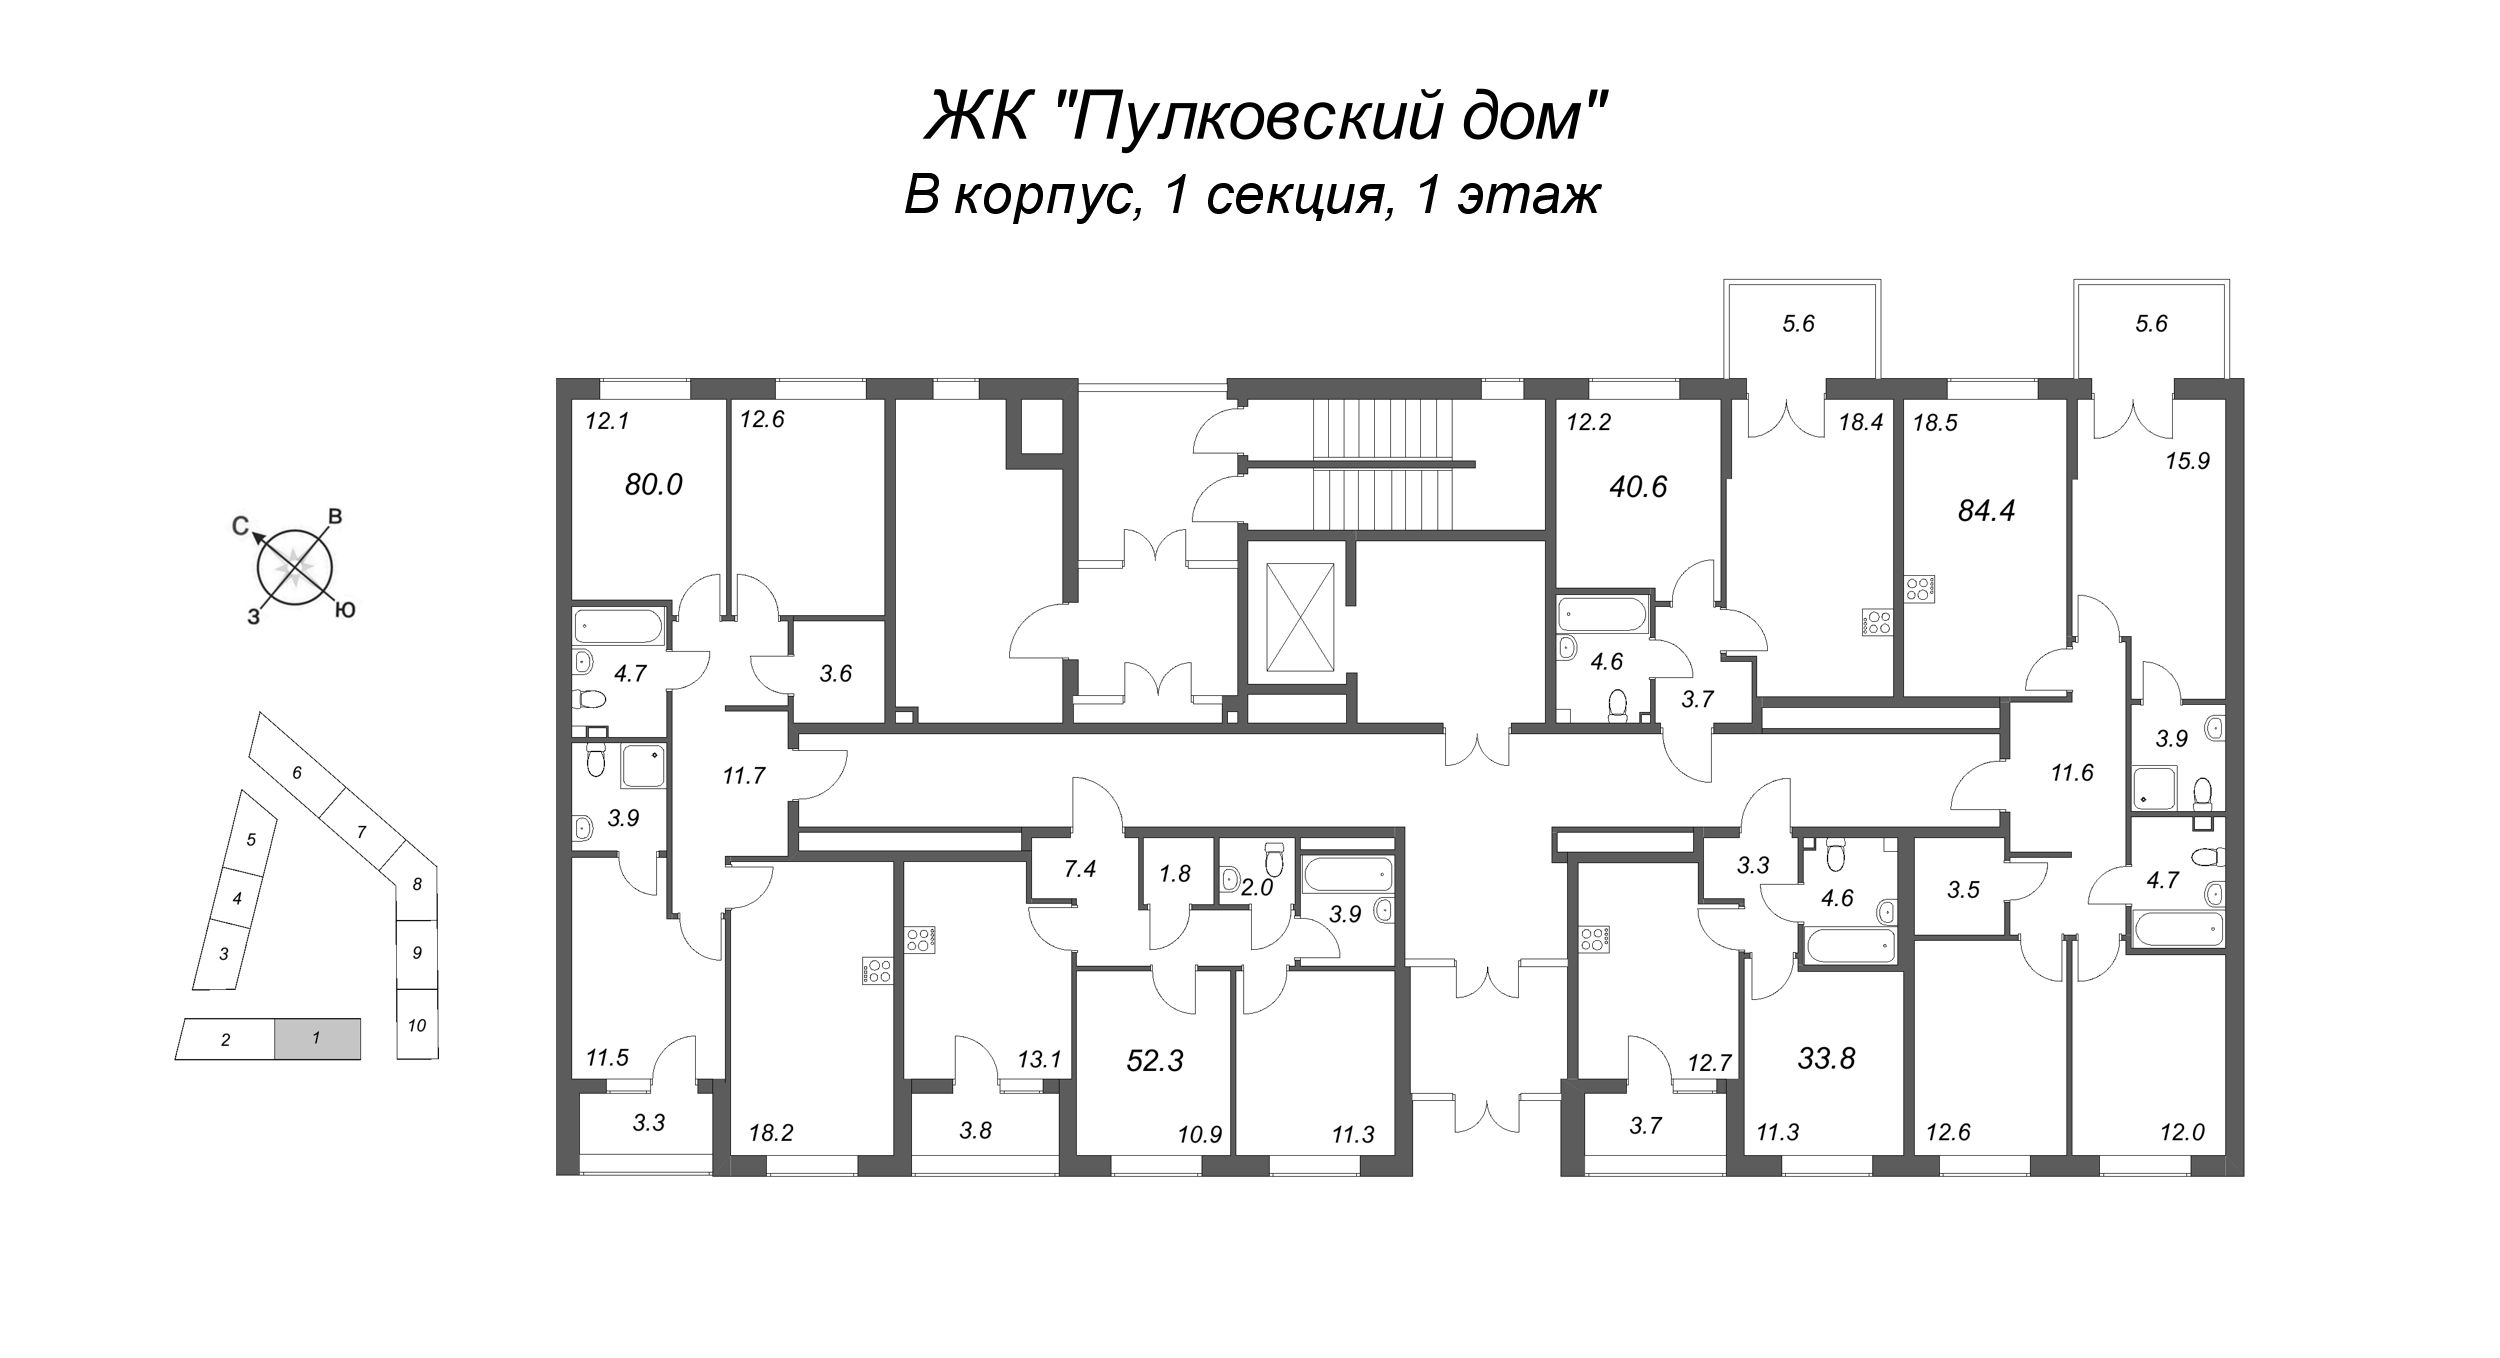 4-комнатная (Евро) квартира, 84.4 м² - планировка этажа